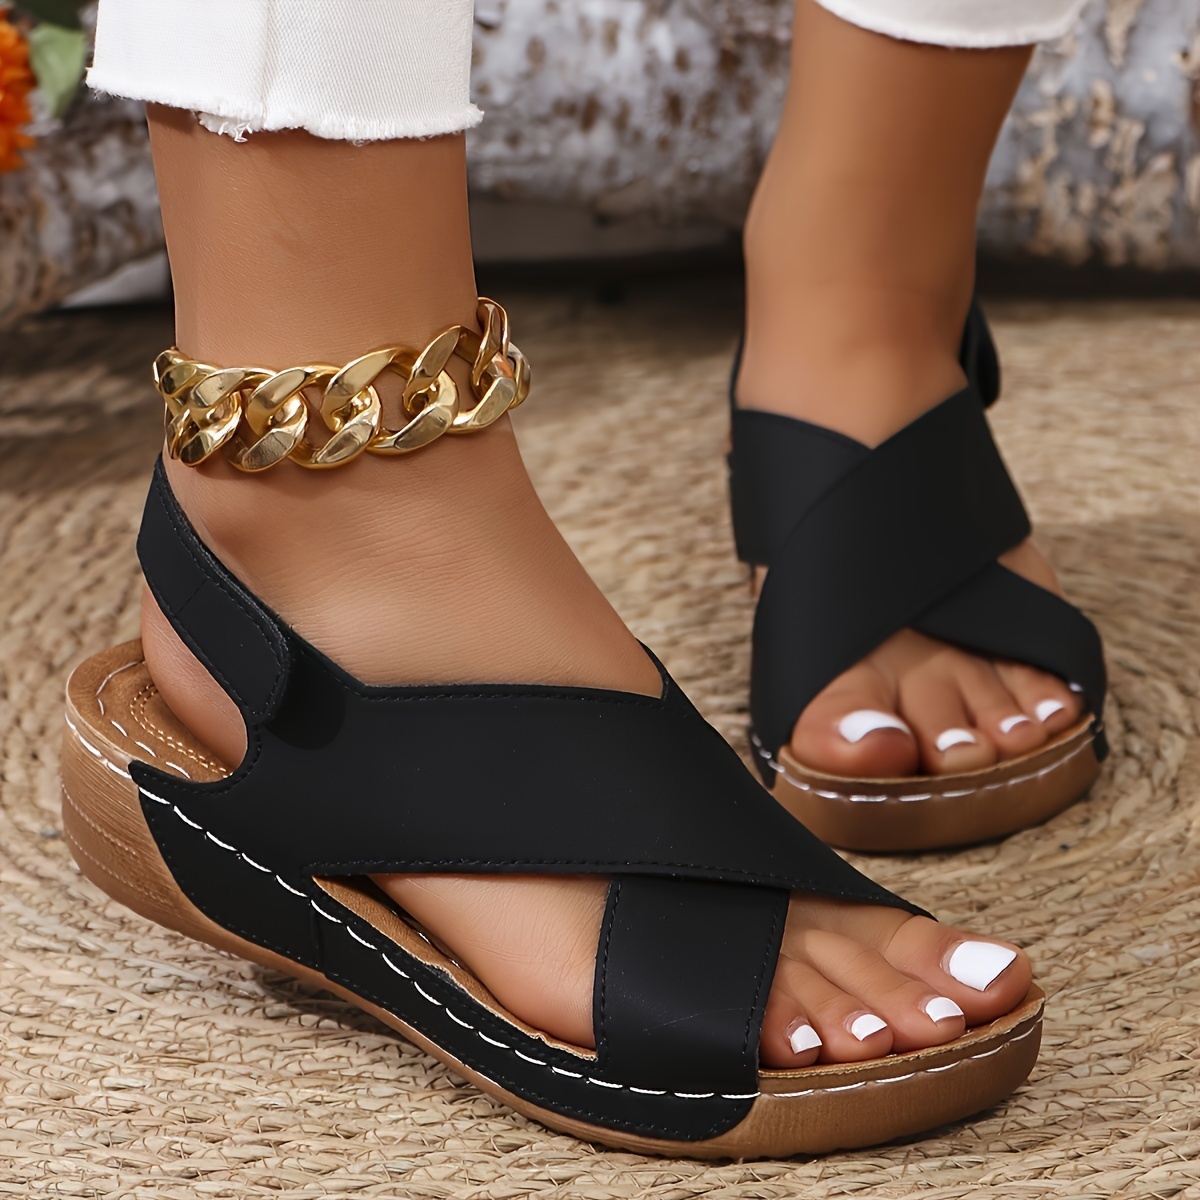 

Women's Solid Color Stylish Sandals, Crisscross Bands Platform Soft Sole Walking Shoes, Slingback Wedge Beach Shoes